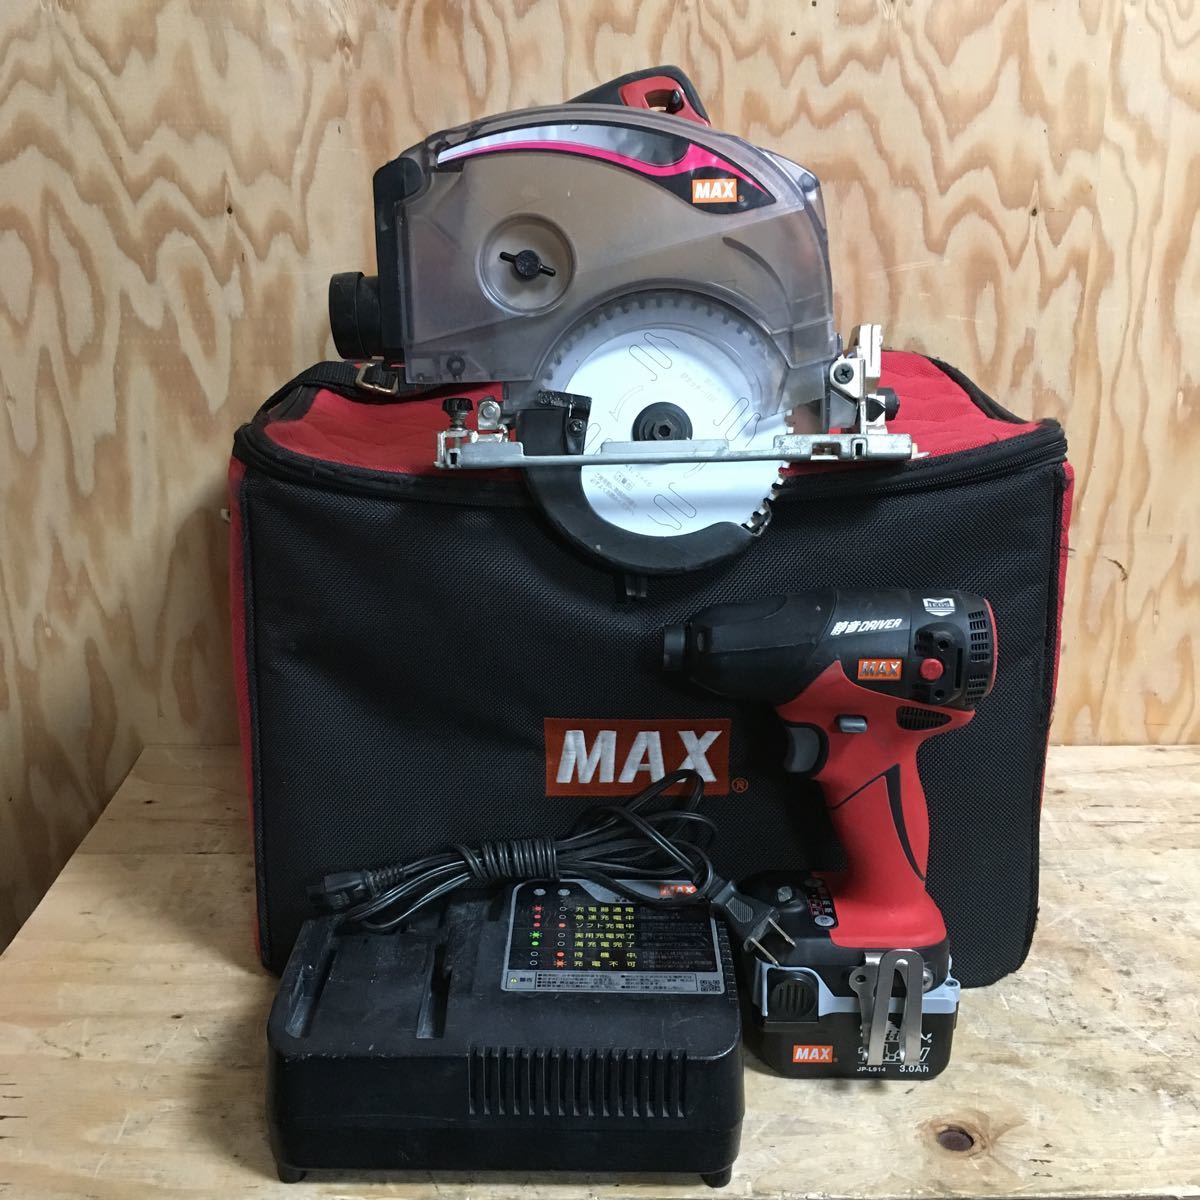 MAX マックス 14.4V 充電工具コンボセット 防じん丸のこ PJ-CS51DP